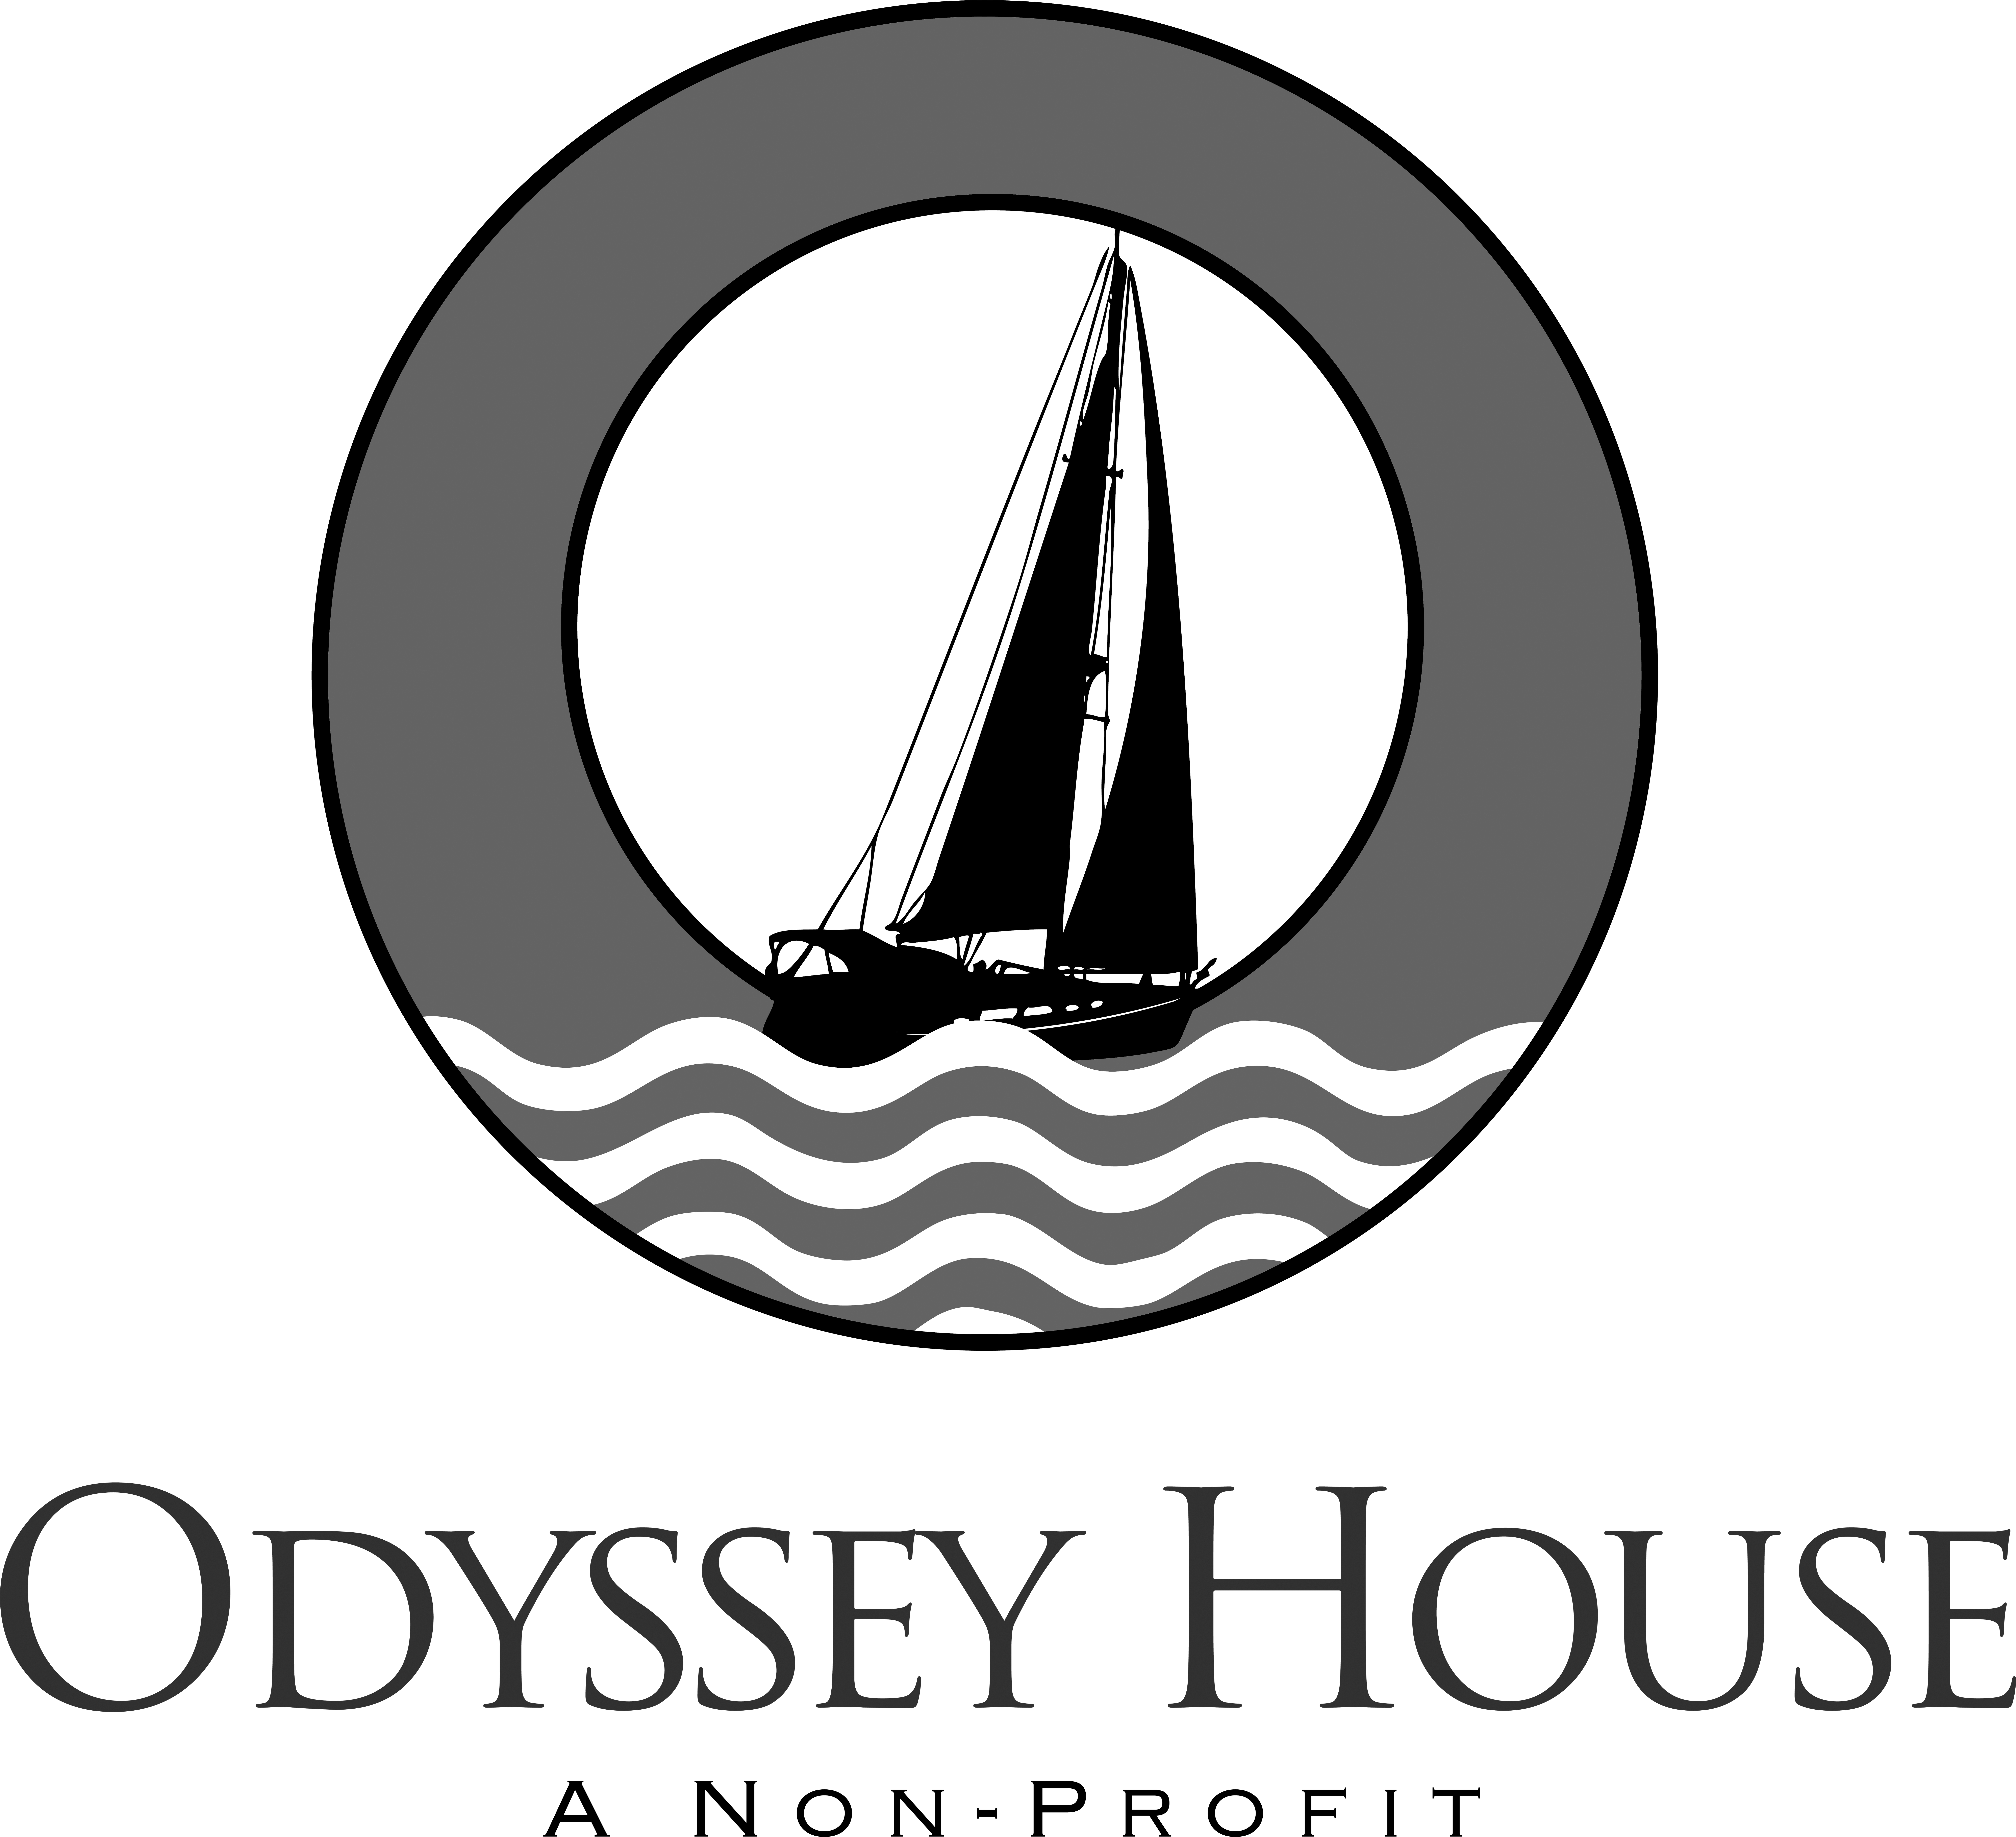 Odyssey House, a non-profit